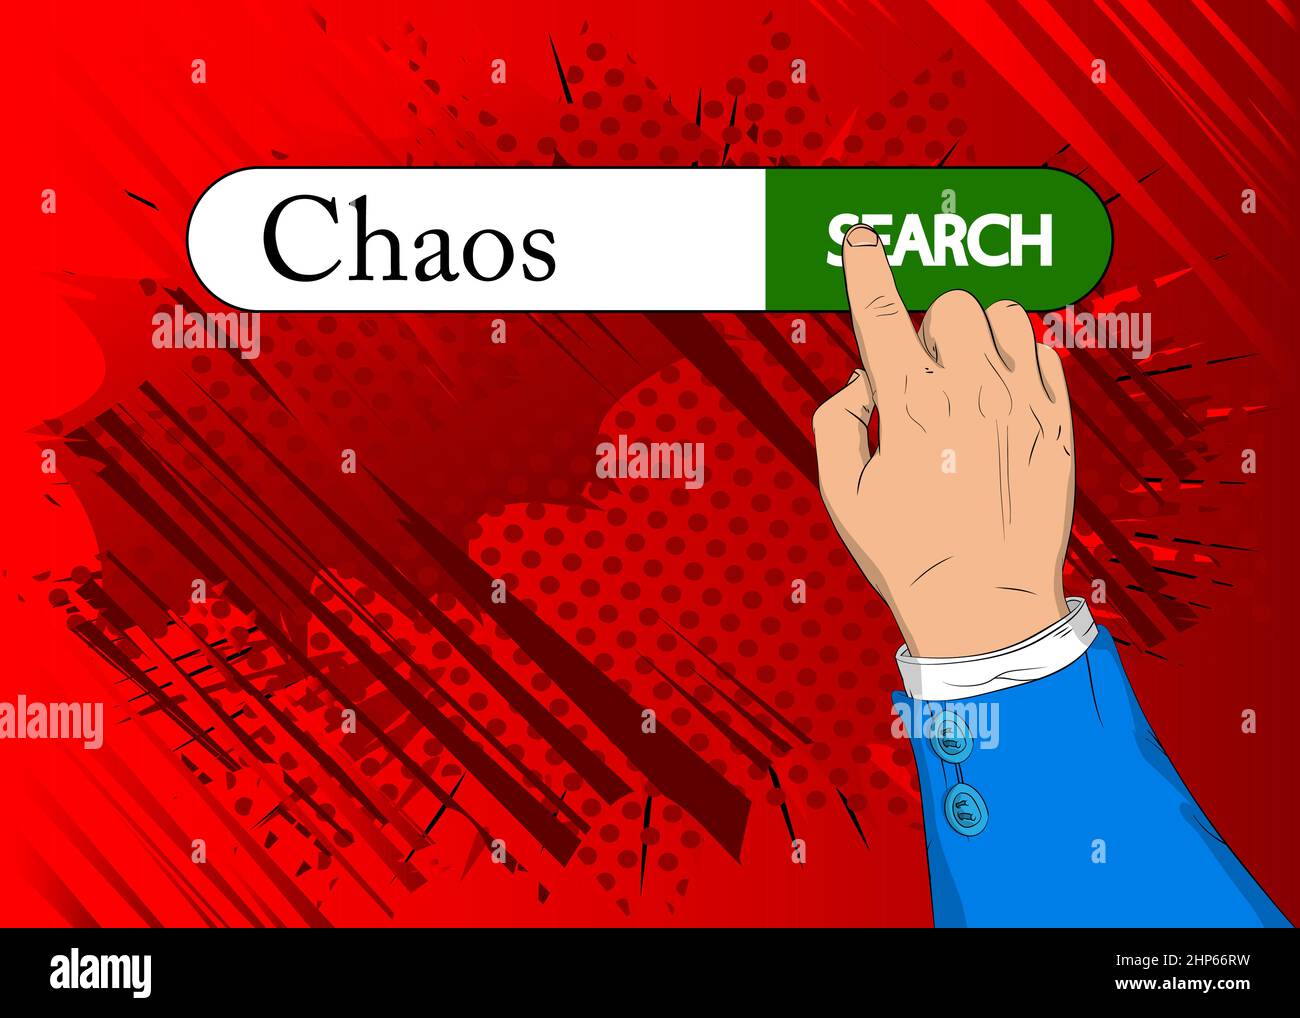 Chaos text, sign. Business Concept. Stock Vector